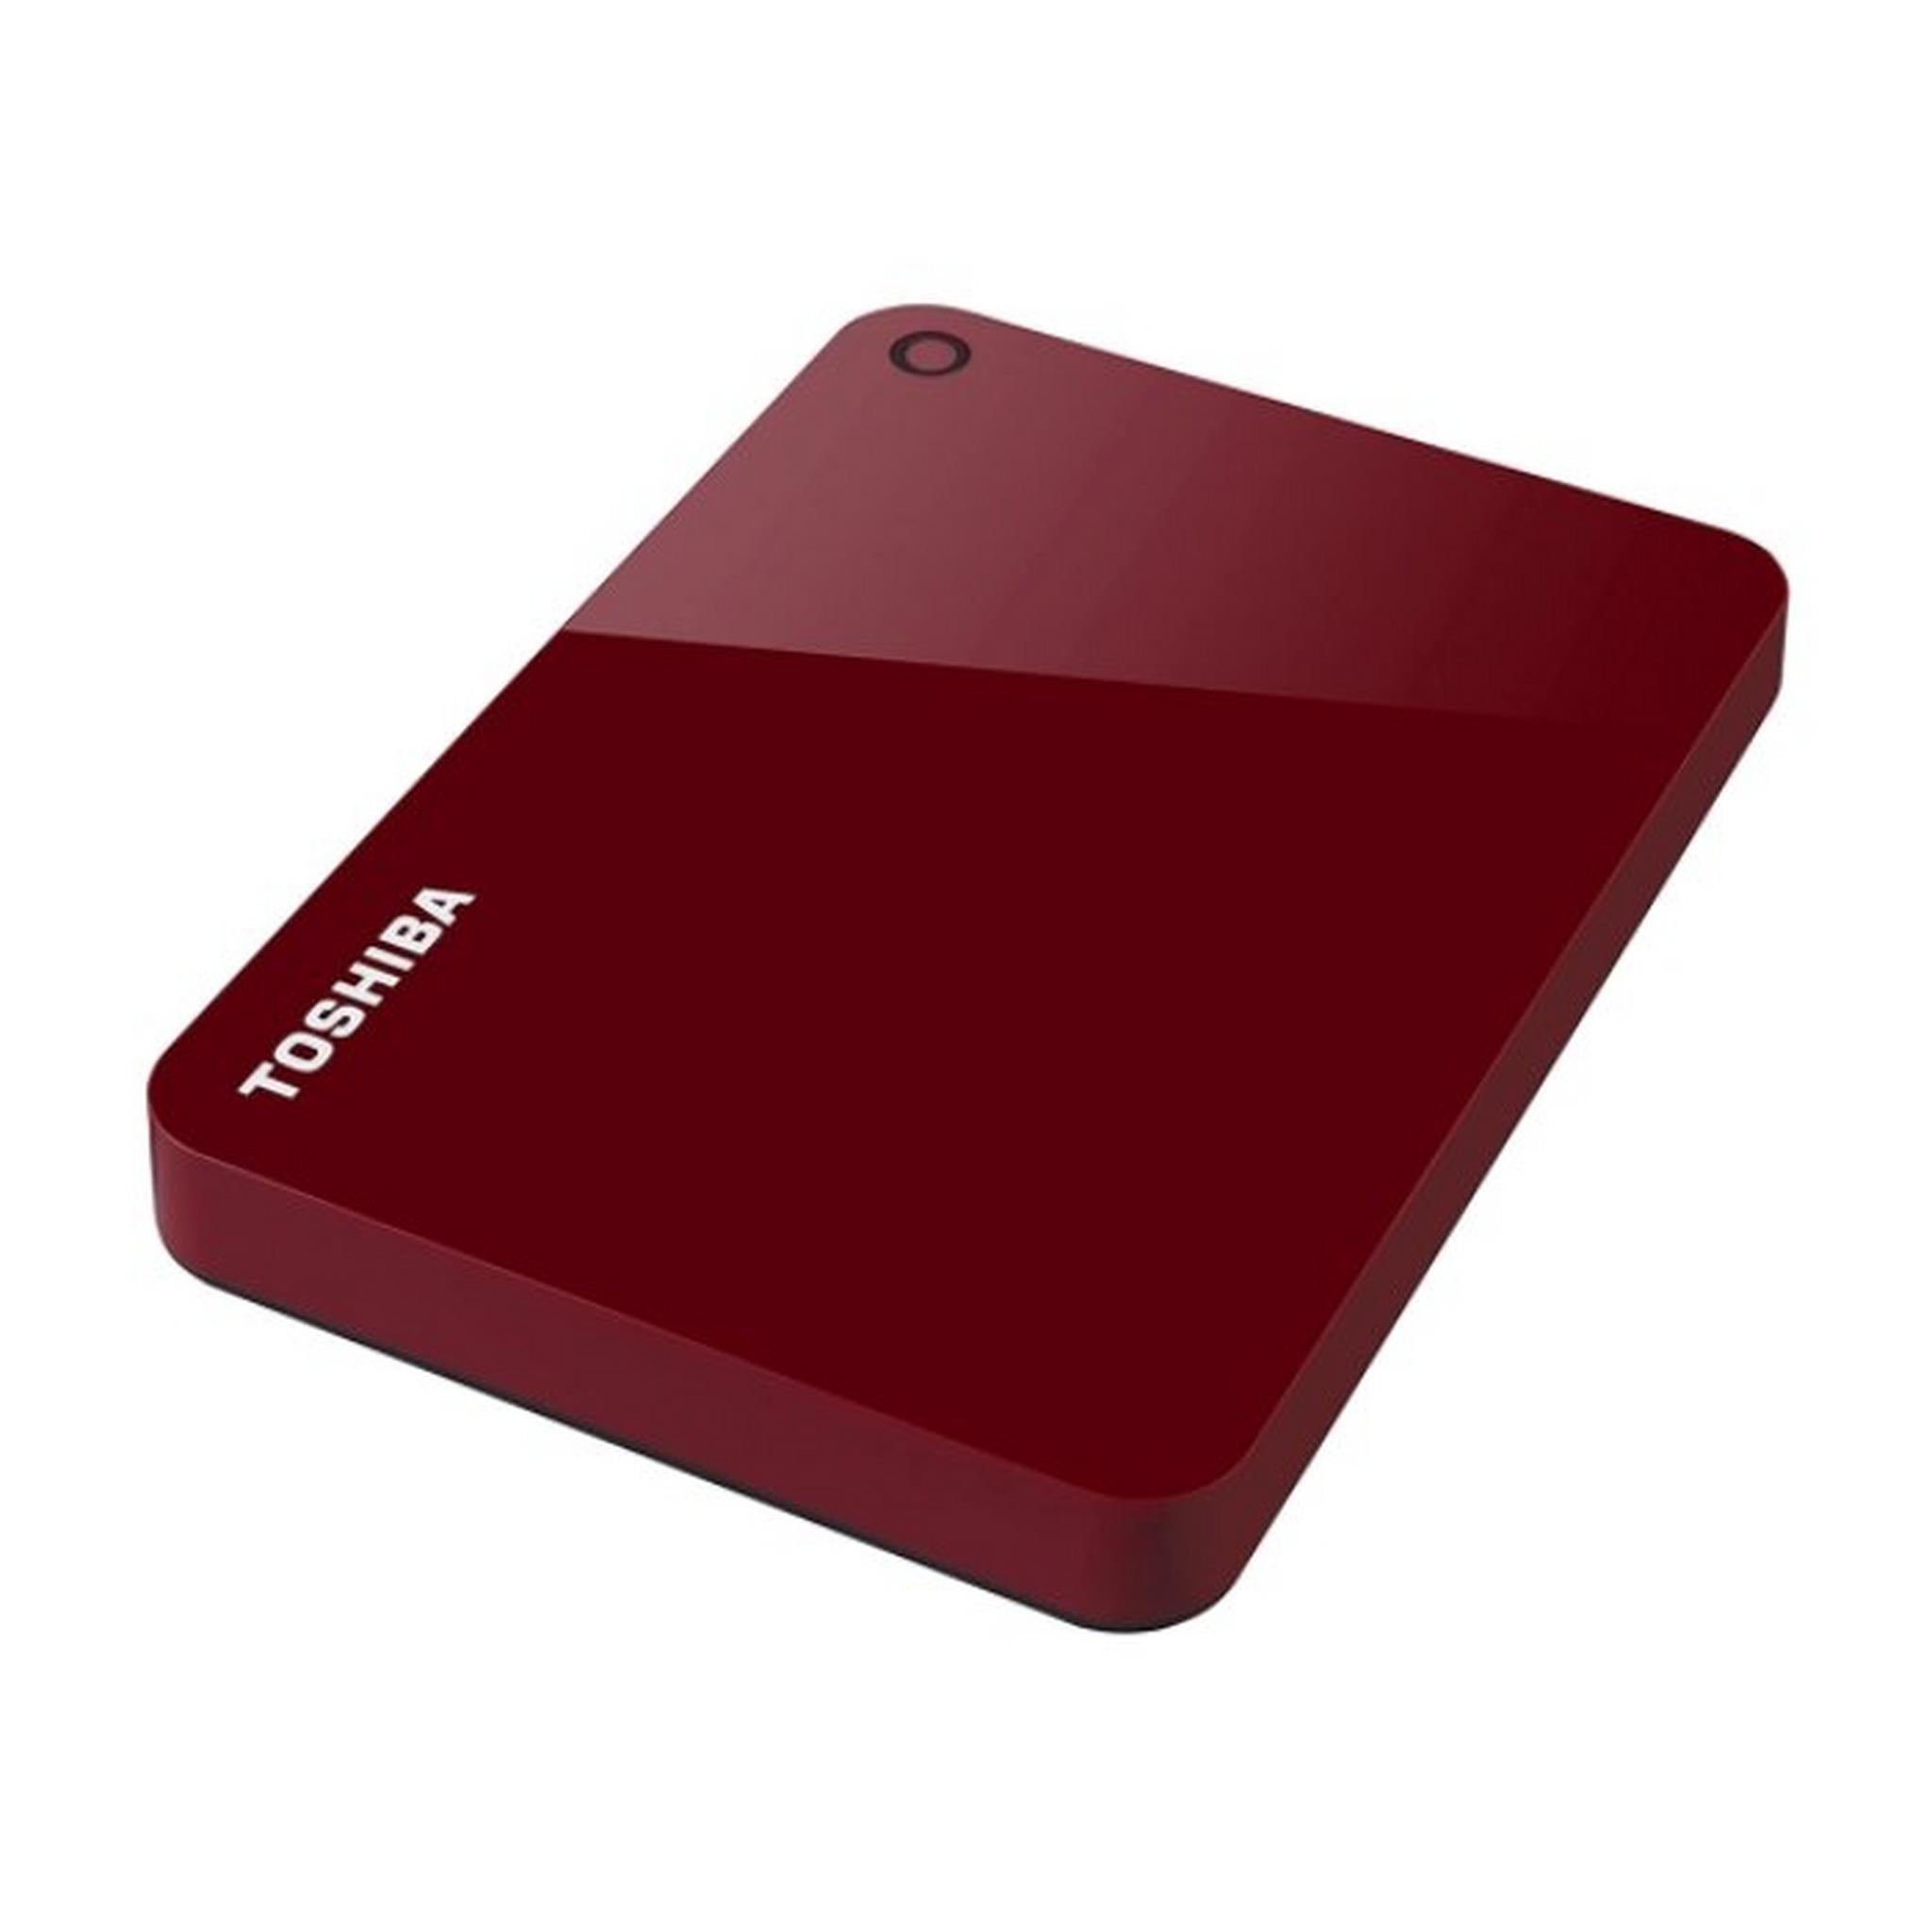 Toshiba Canvio Advance 2TB External Hard Drive - Red